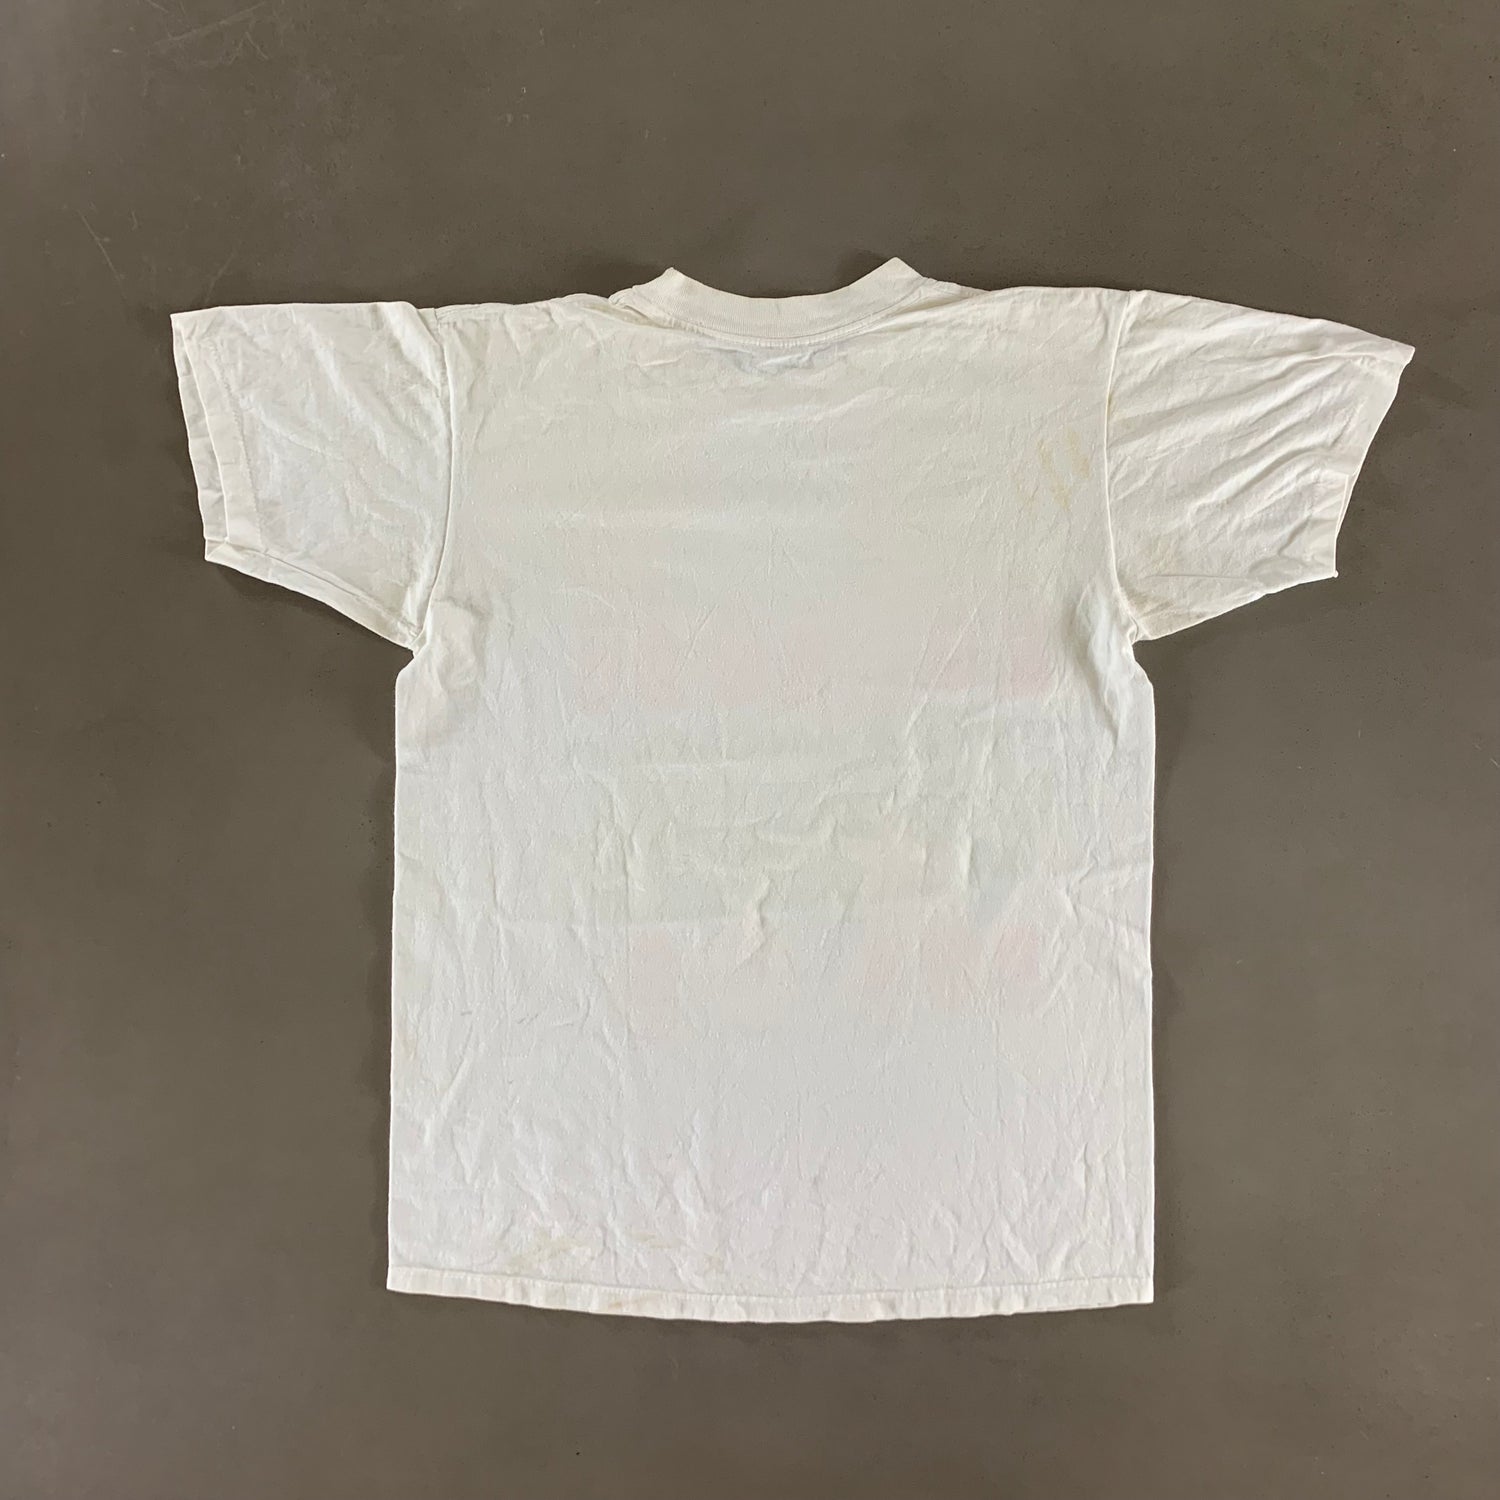 Vintage 1980s Boston T-shirt size Medium